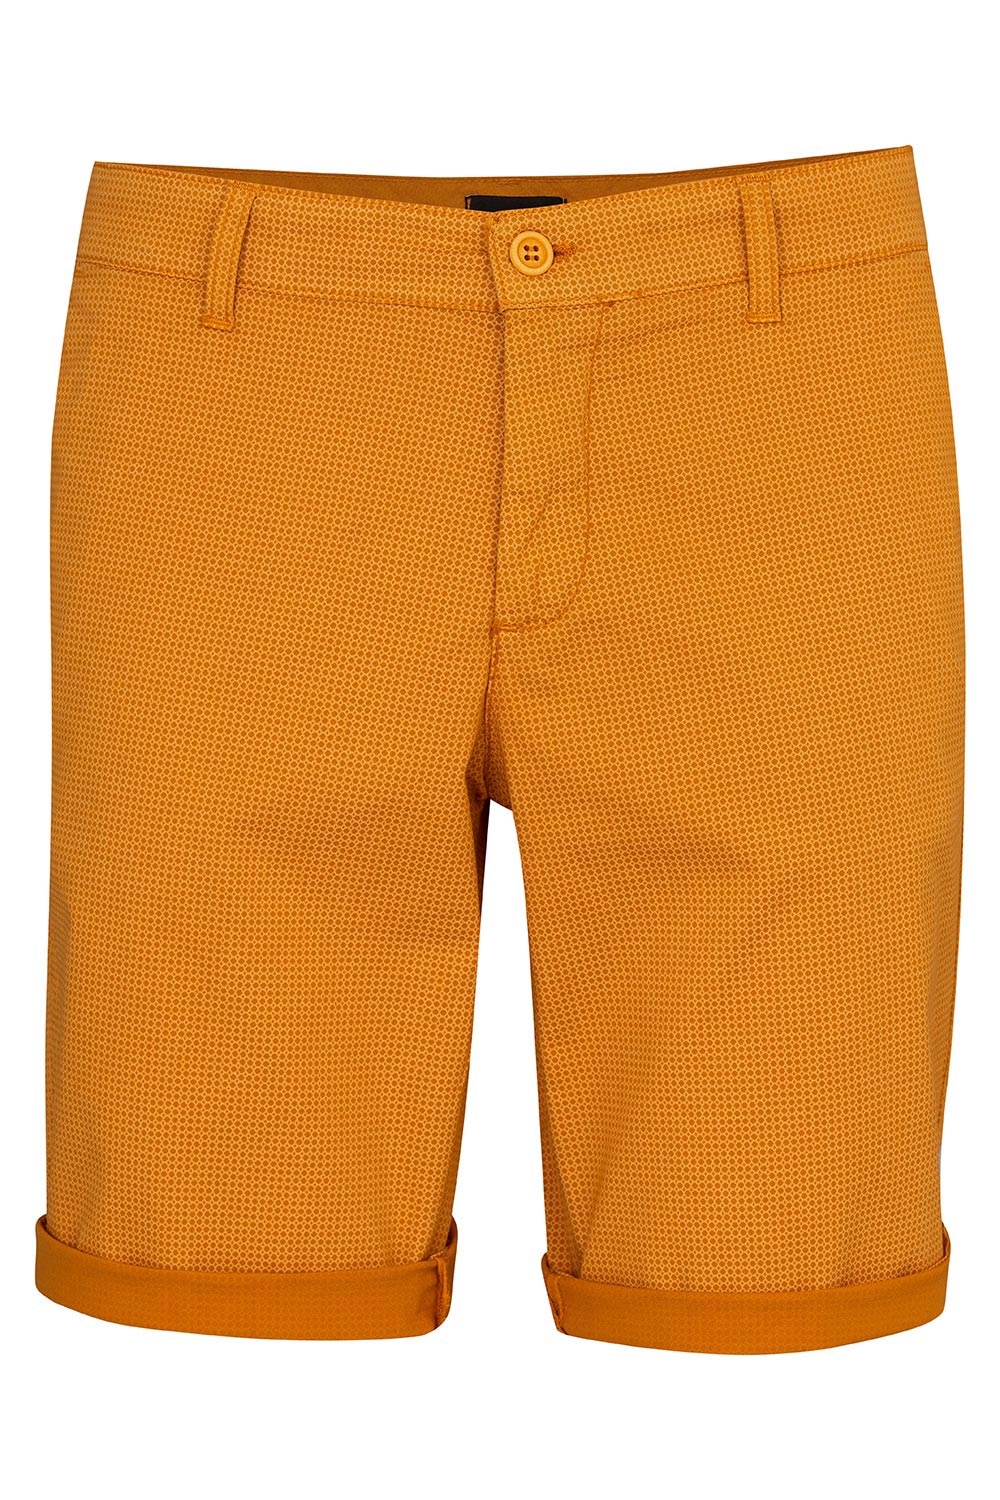 Pantaloni scurti slim oranj print geometric 1